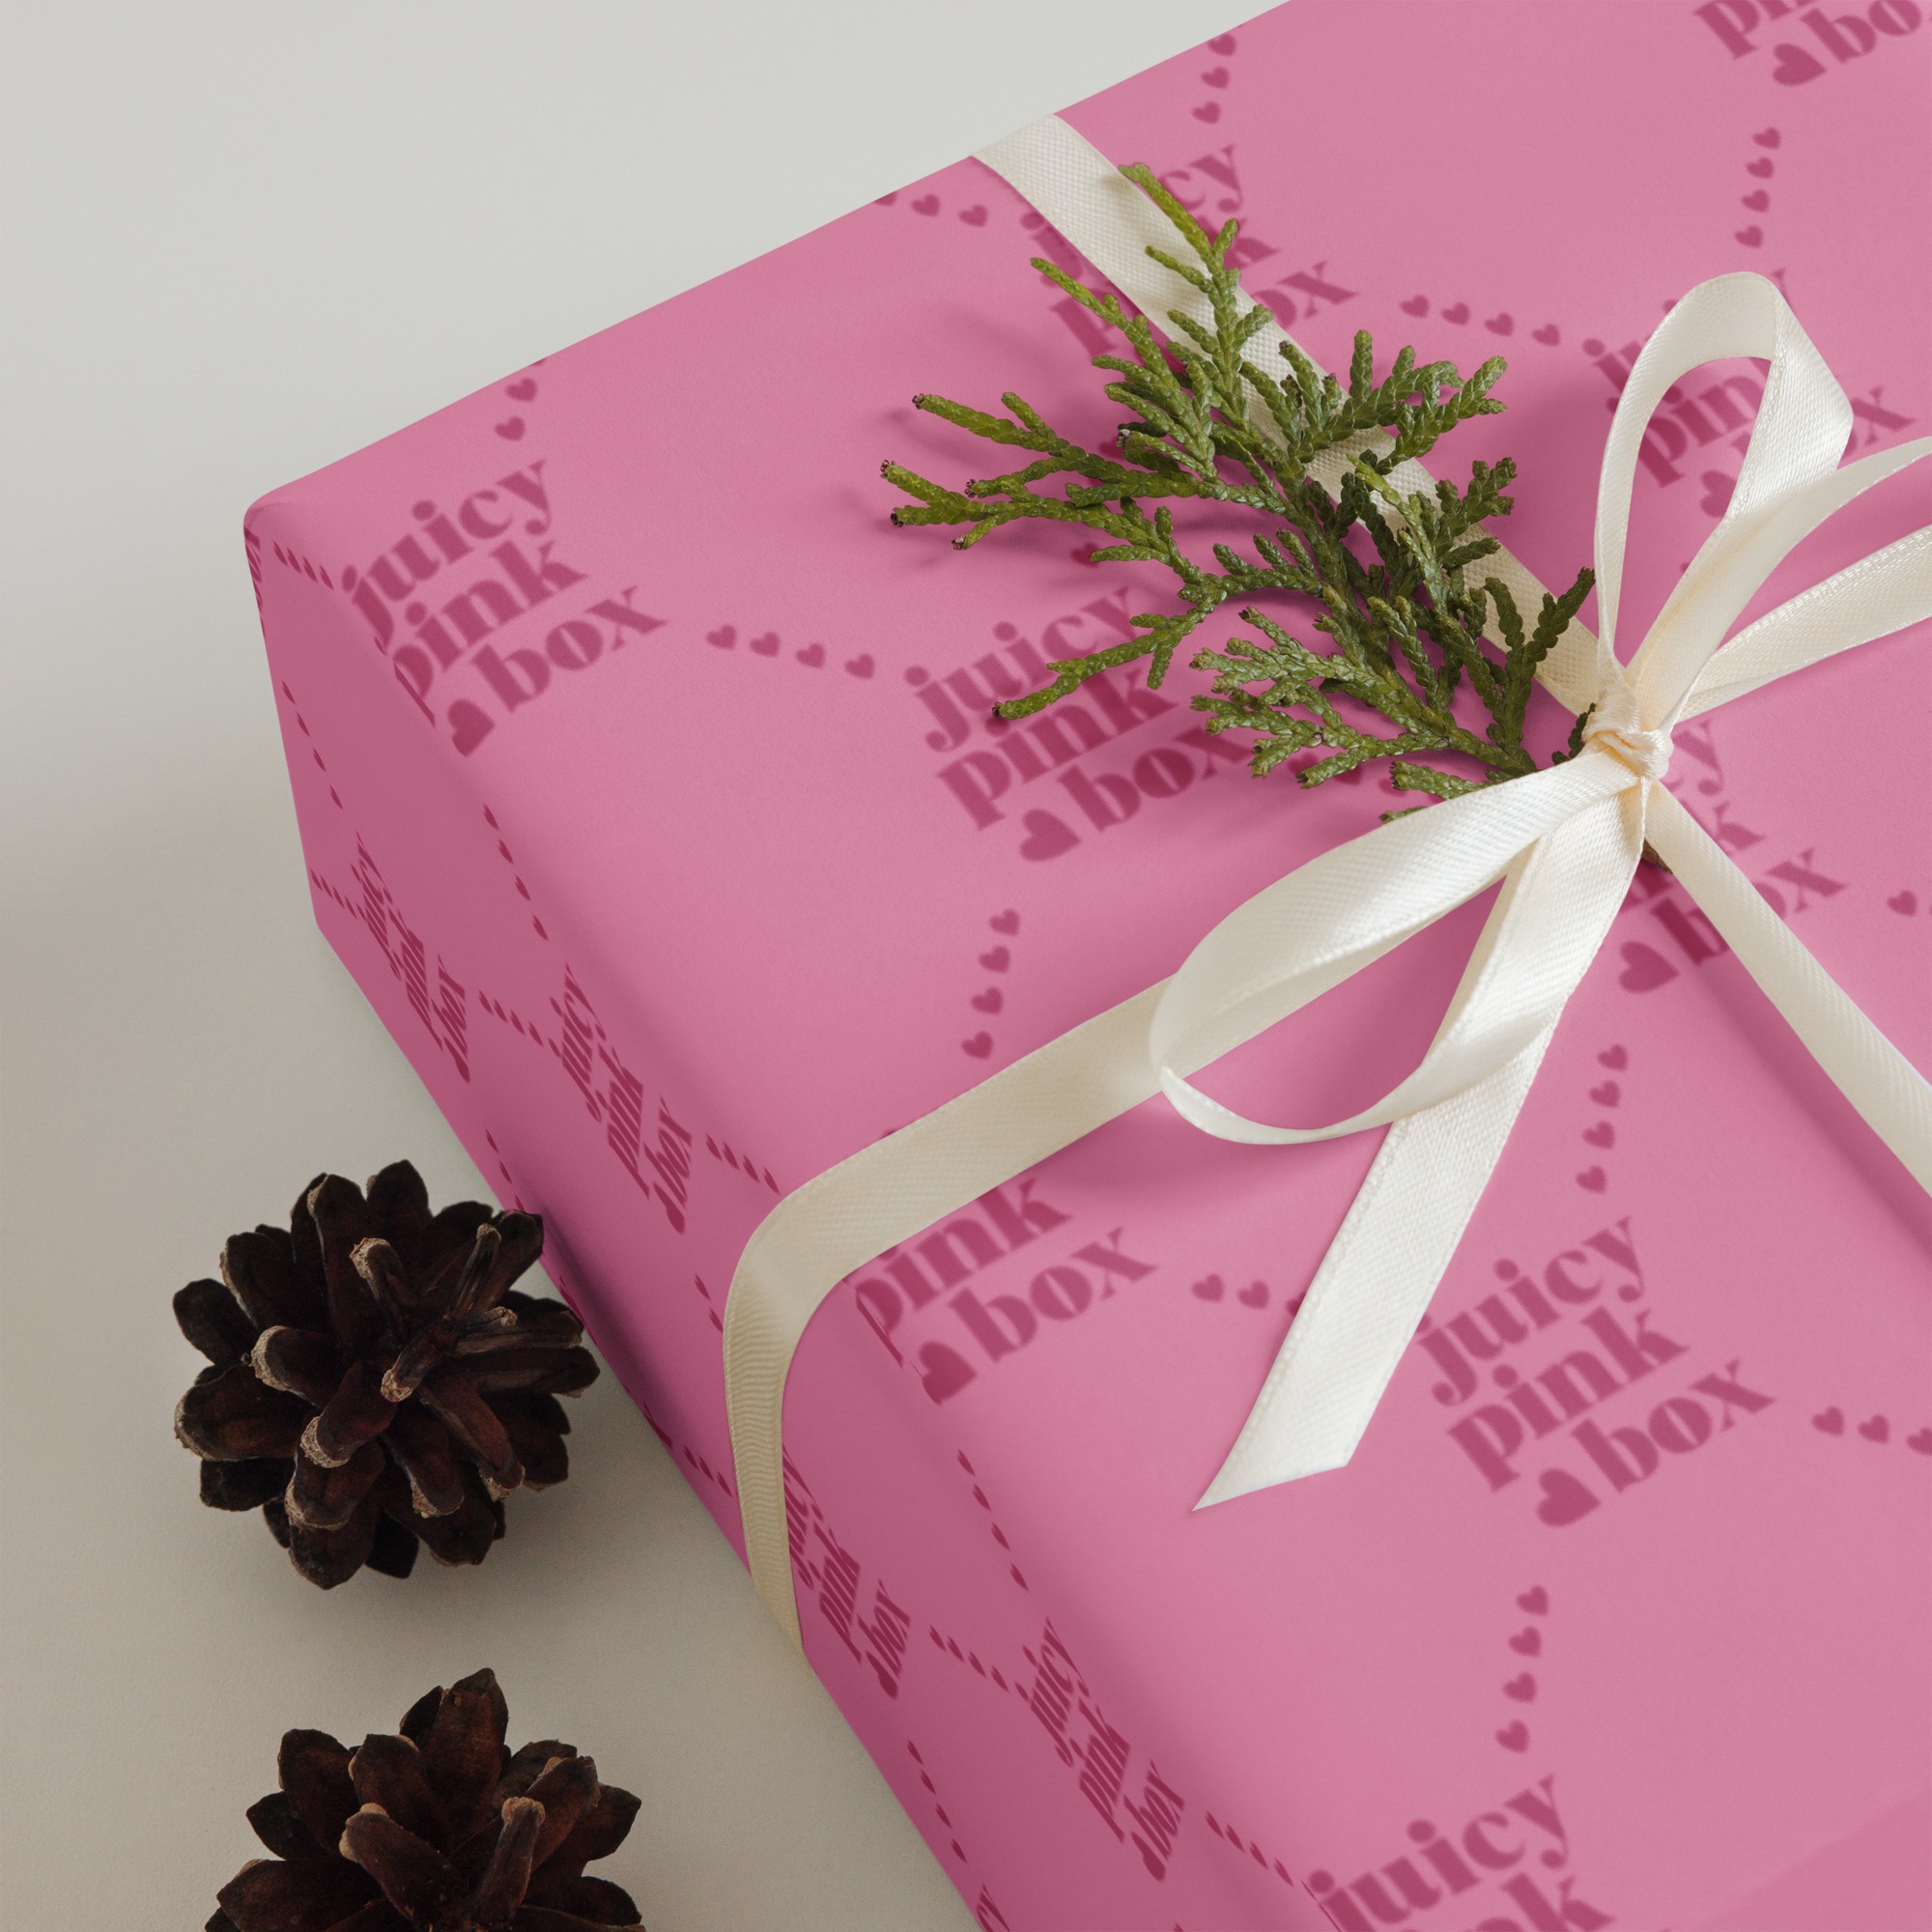 juicypinkbox Gift Wrap